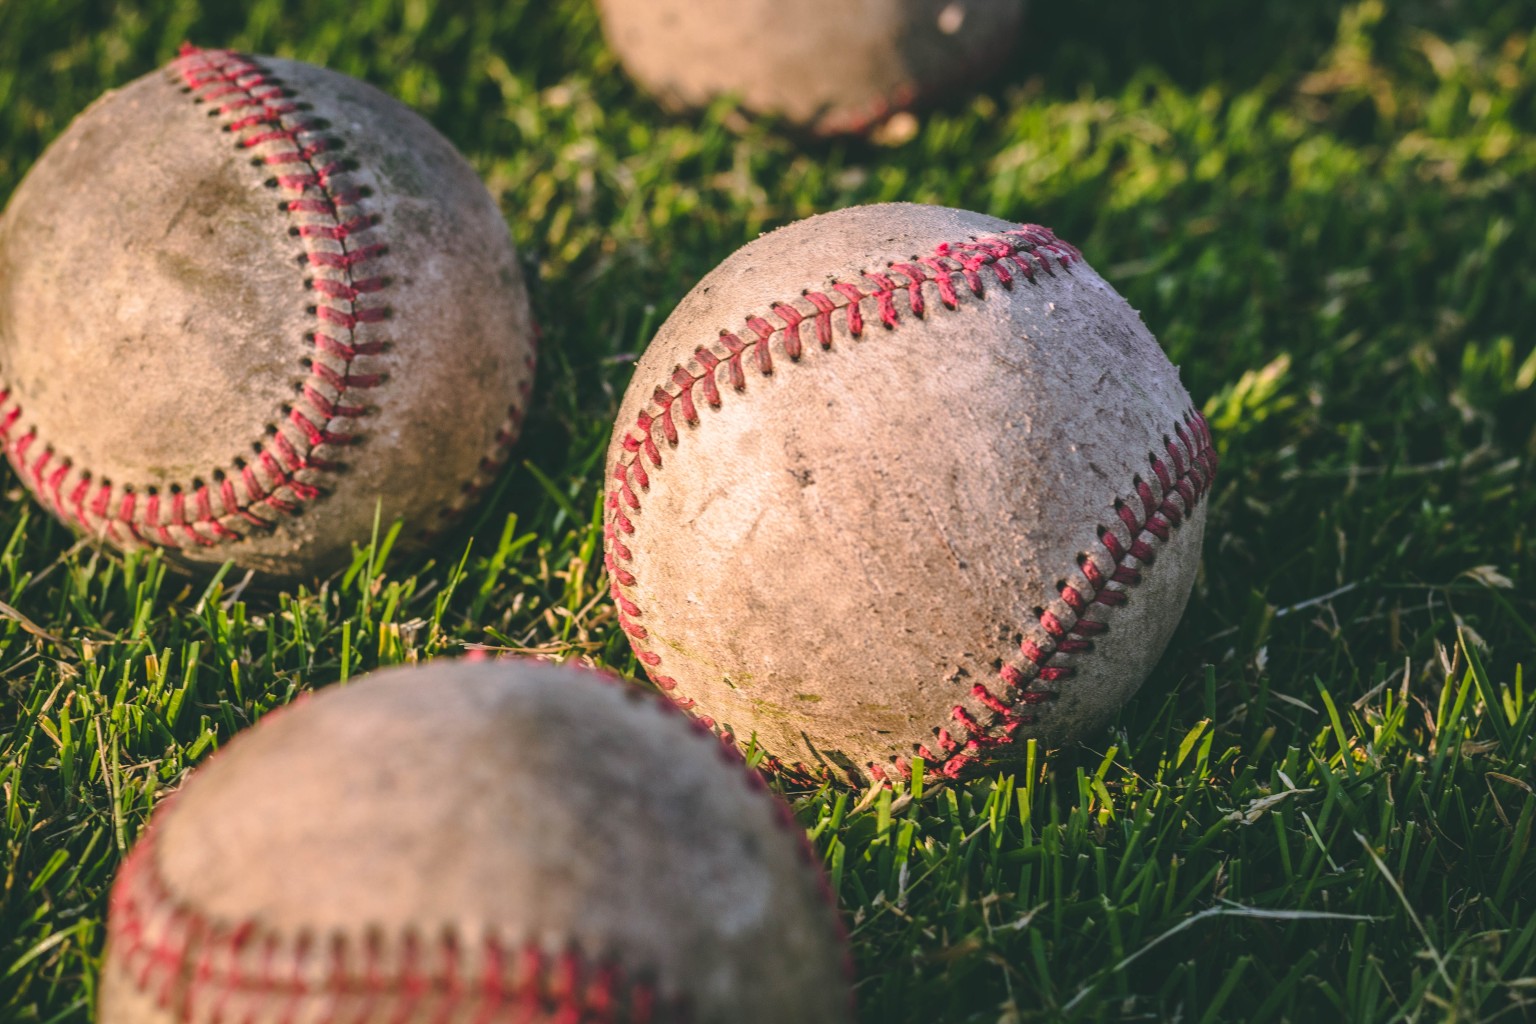 baseballs in grass (Source: Pexels/Steshka Willems)